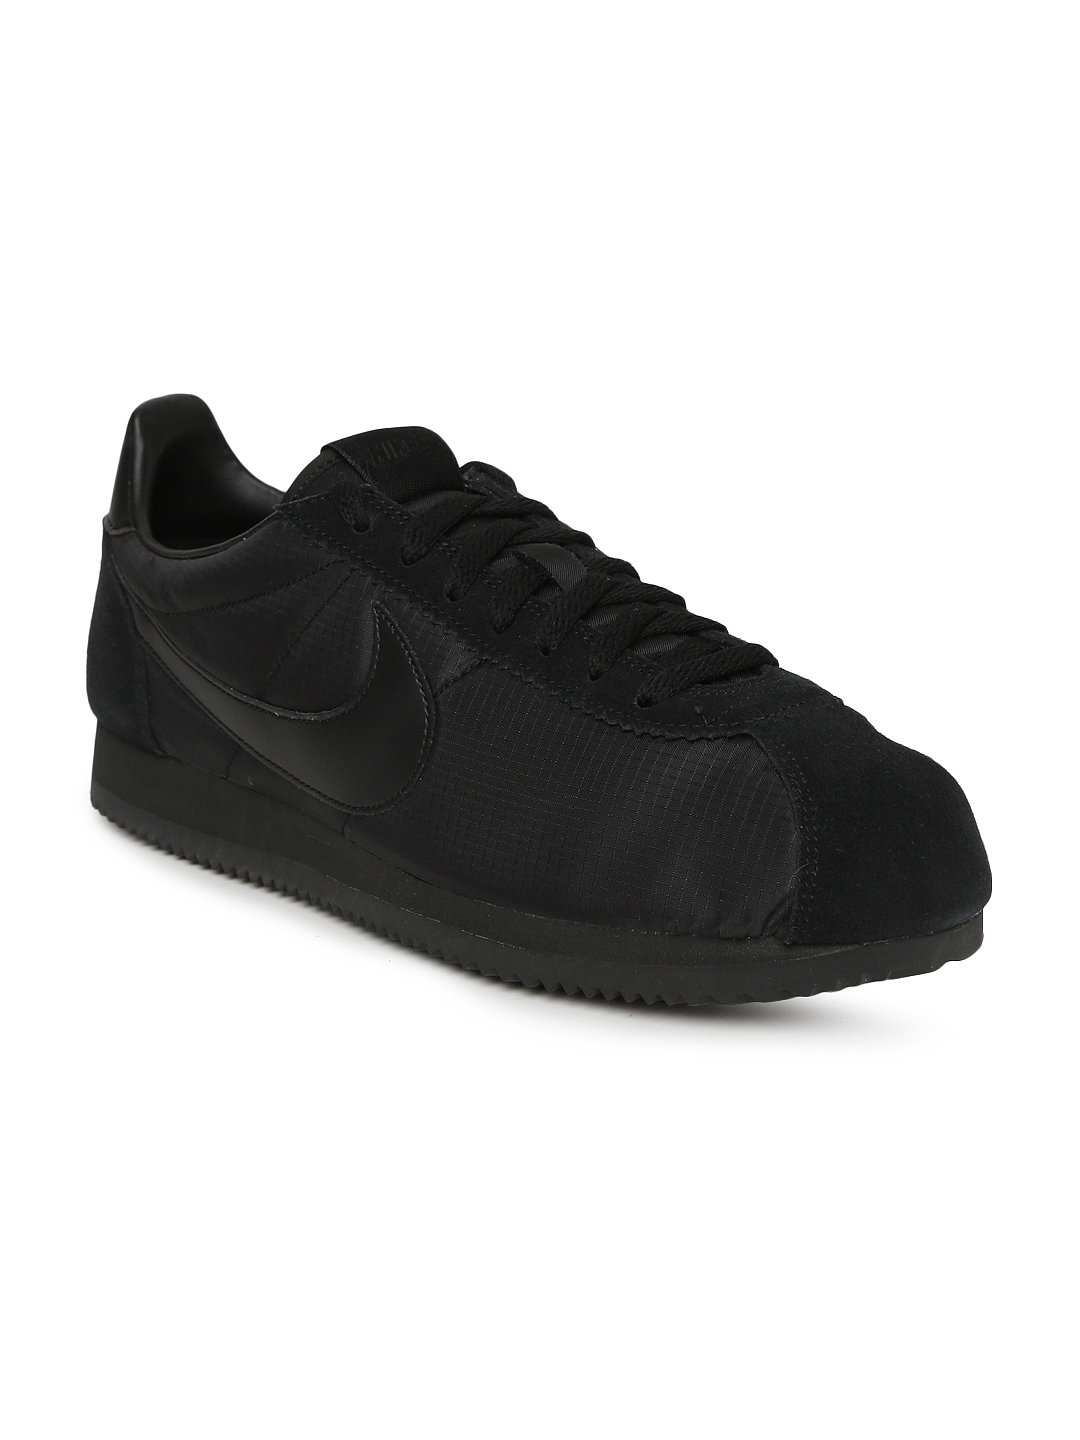 Buy Nike Men Black CLASSIC CORTEZ Sneakers - Casual Shoes for Men